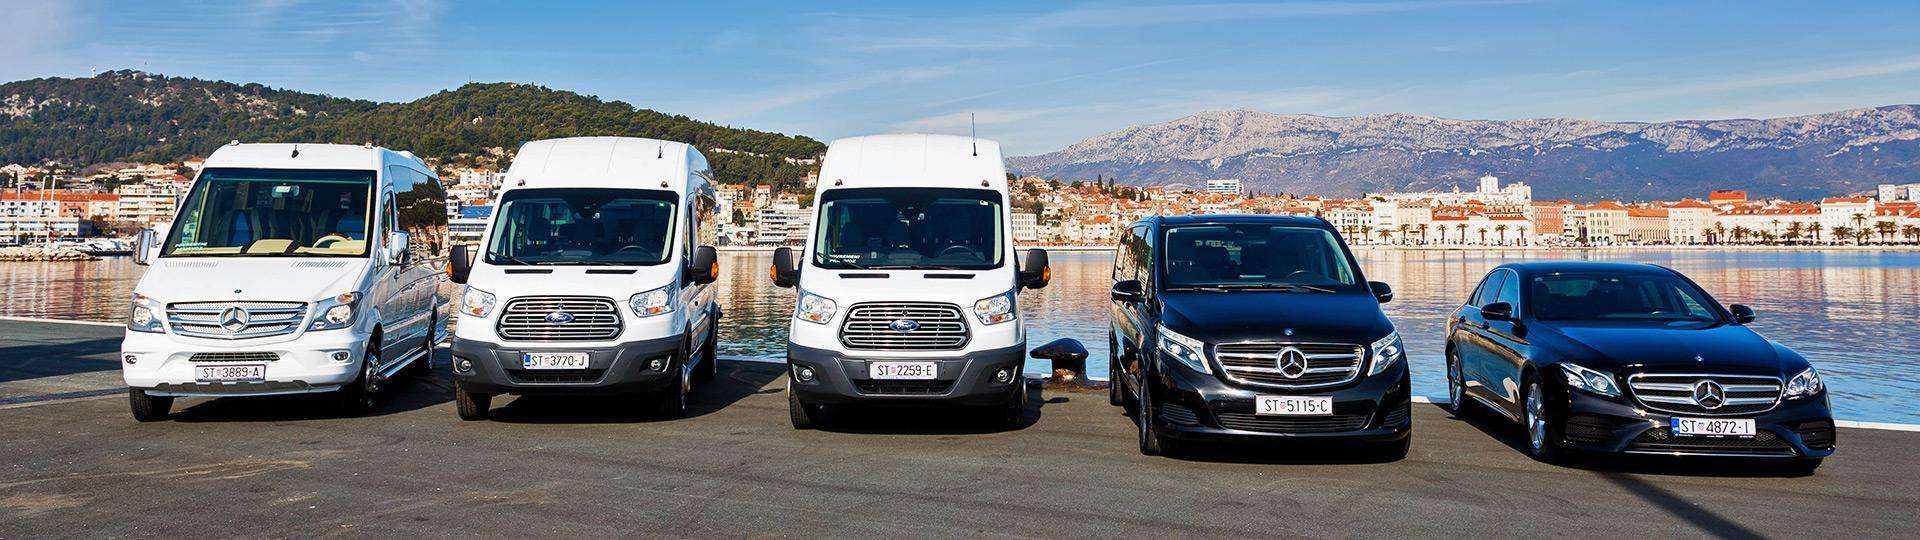 Blue Shark land transfer vehicles on parking place near waterfront in Split